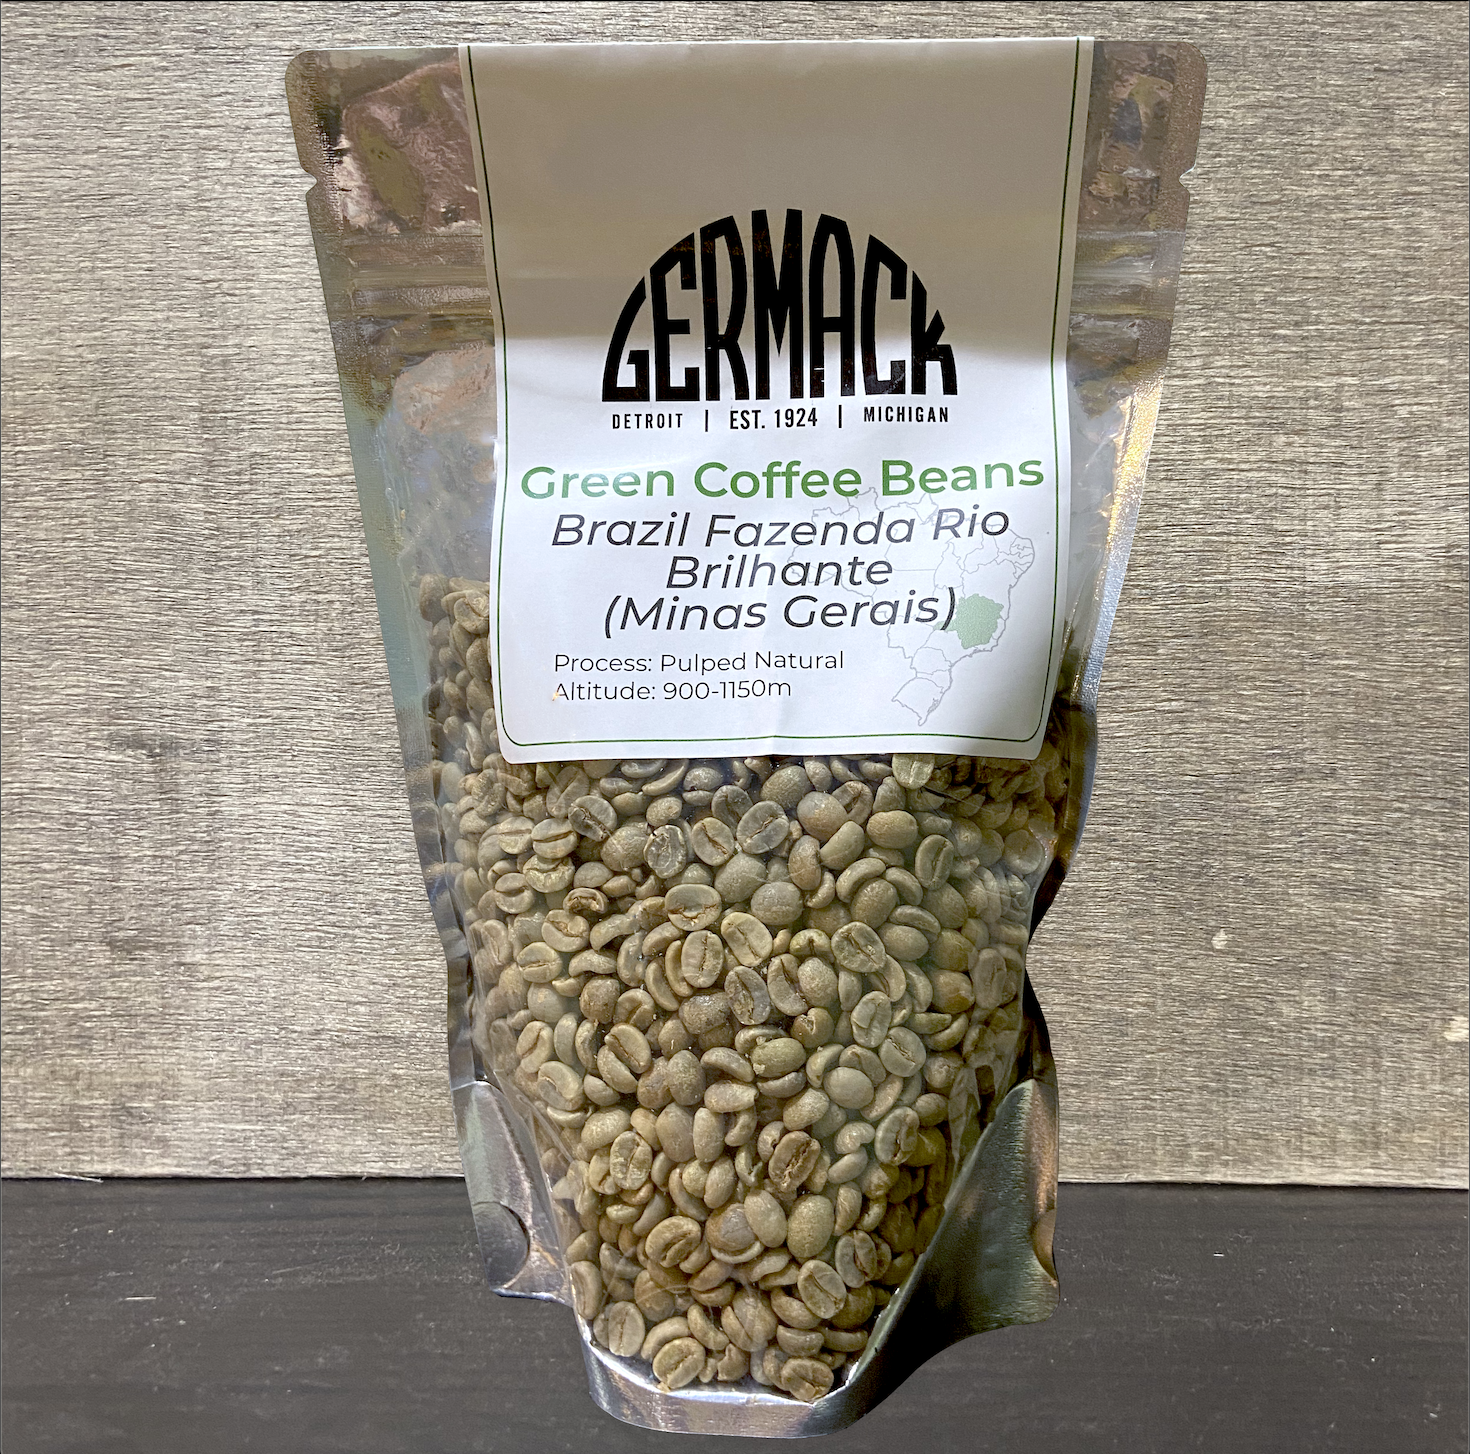 Picture Germack Green Coffee Beans (1 lb) - Brazil Fazenda Rio Brilhante